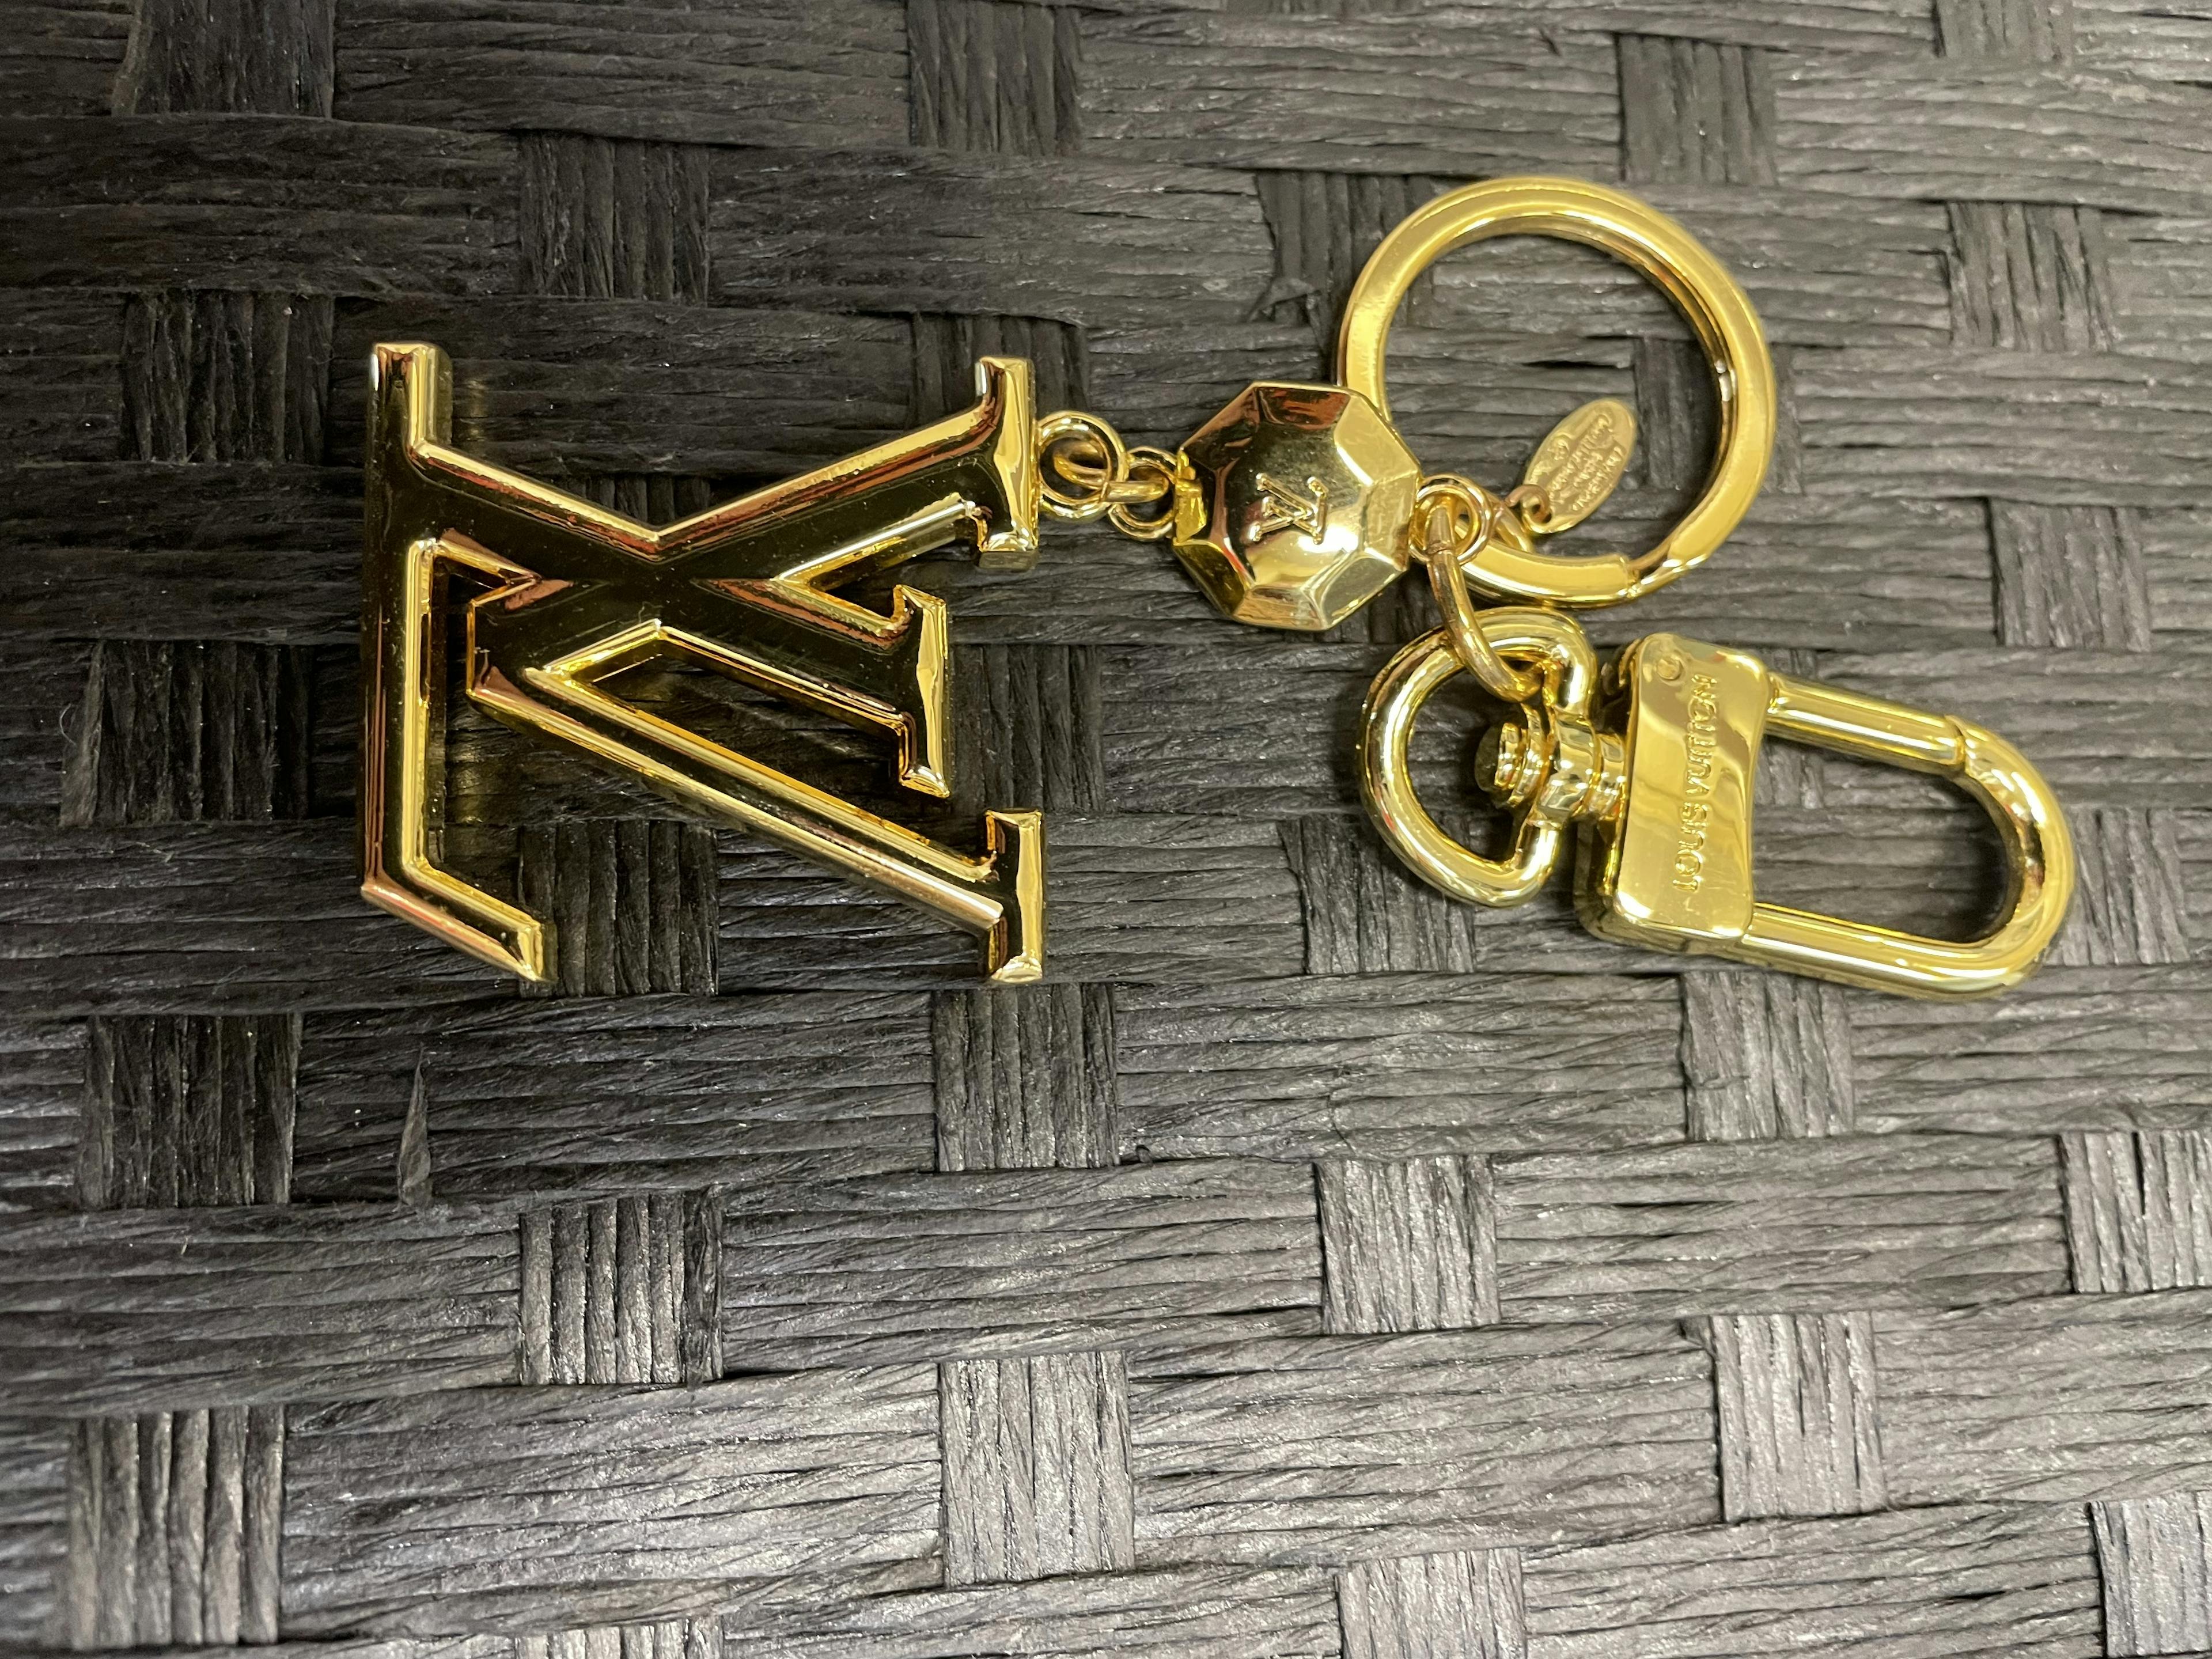 LV Inspired key chain